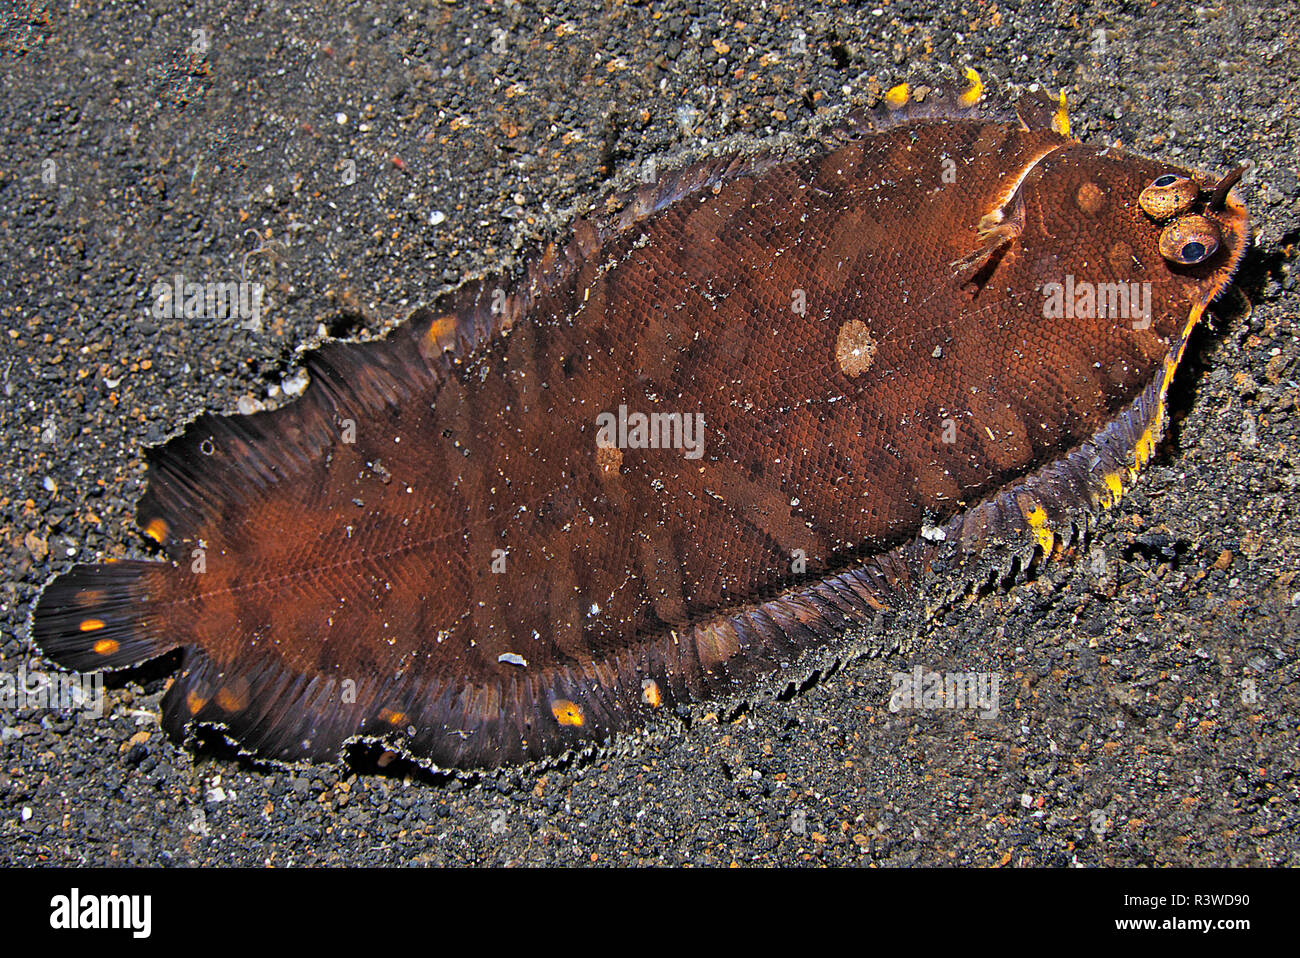 Rotbraune Seezunge (Soleidae) liegt auf Sand, Sulawesi, Indonesien| Redbrown Sea flounder (Soleidae), laying on sand, Sulawesi, Indonesia Stock Photo